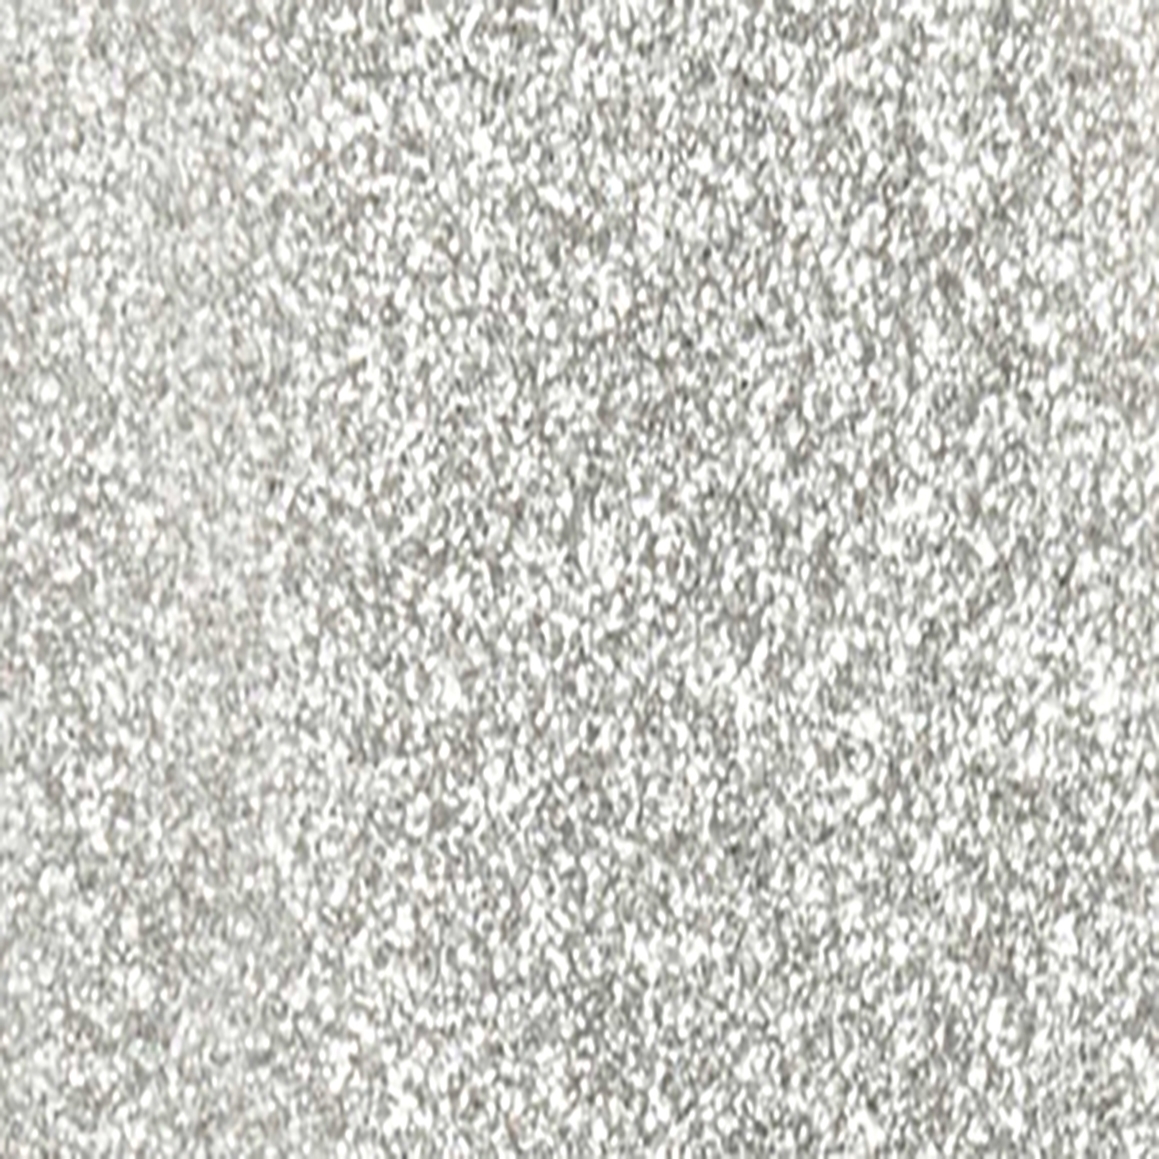 Термотрансферная пленка с глиттером- Glitter Heat Transfer Material цвет White Silver от Silhouette